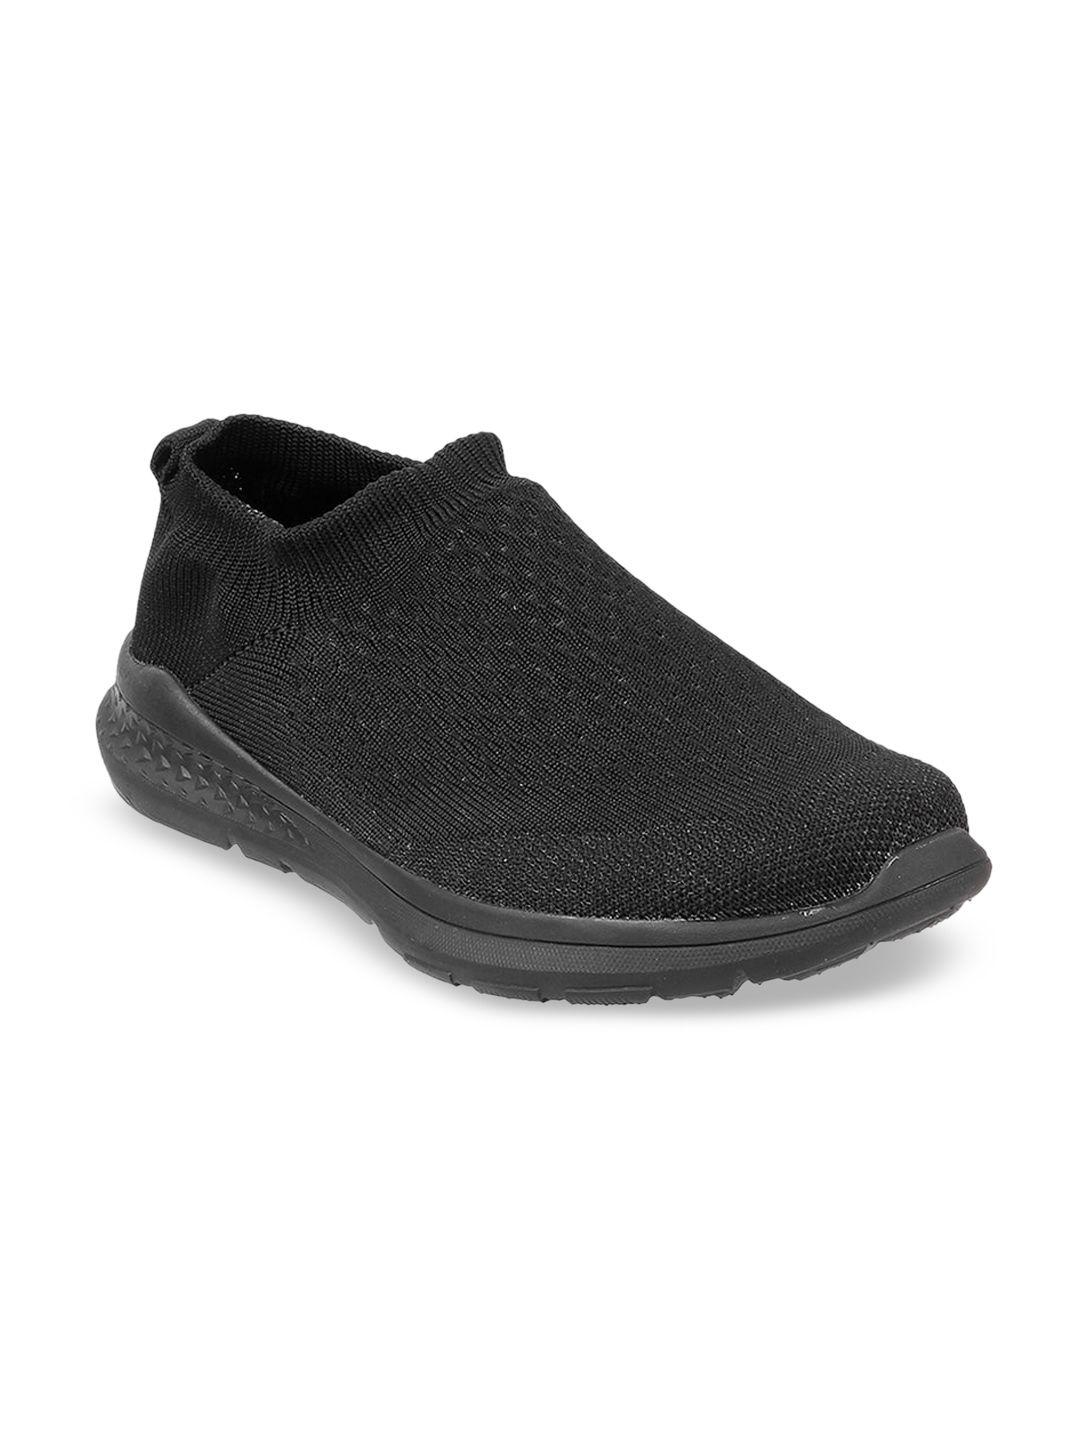 mochi men woven design comfort insole basics slip-on sneakers